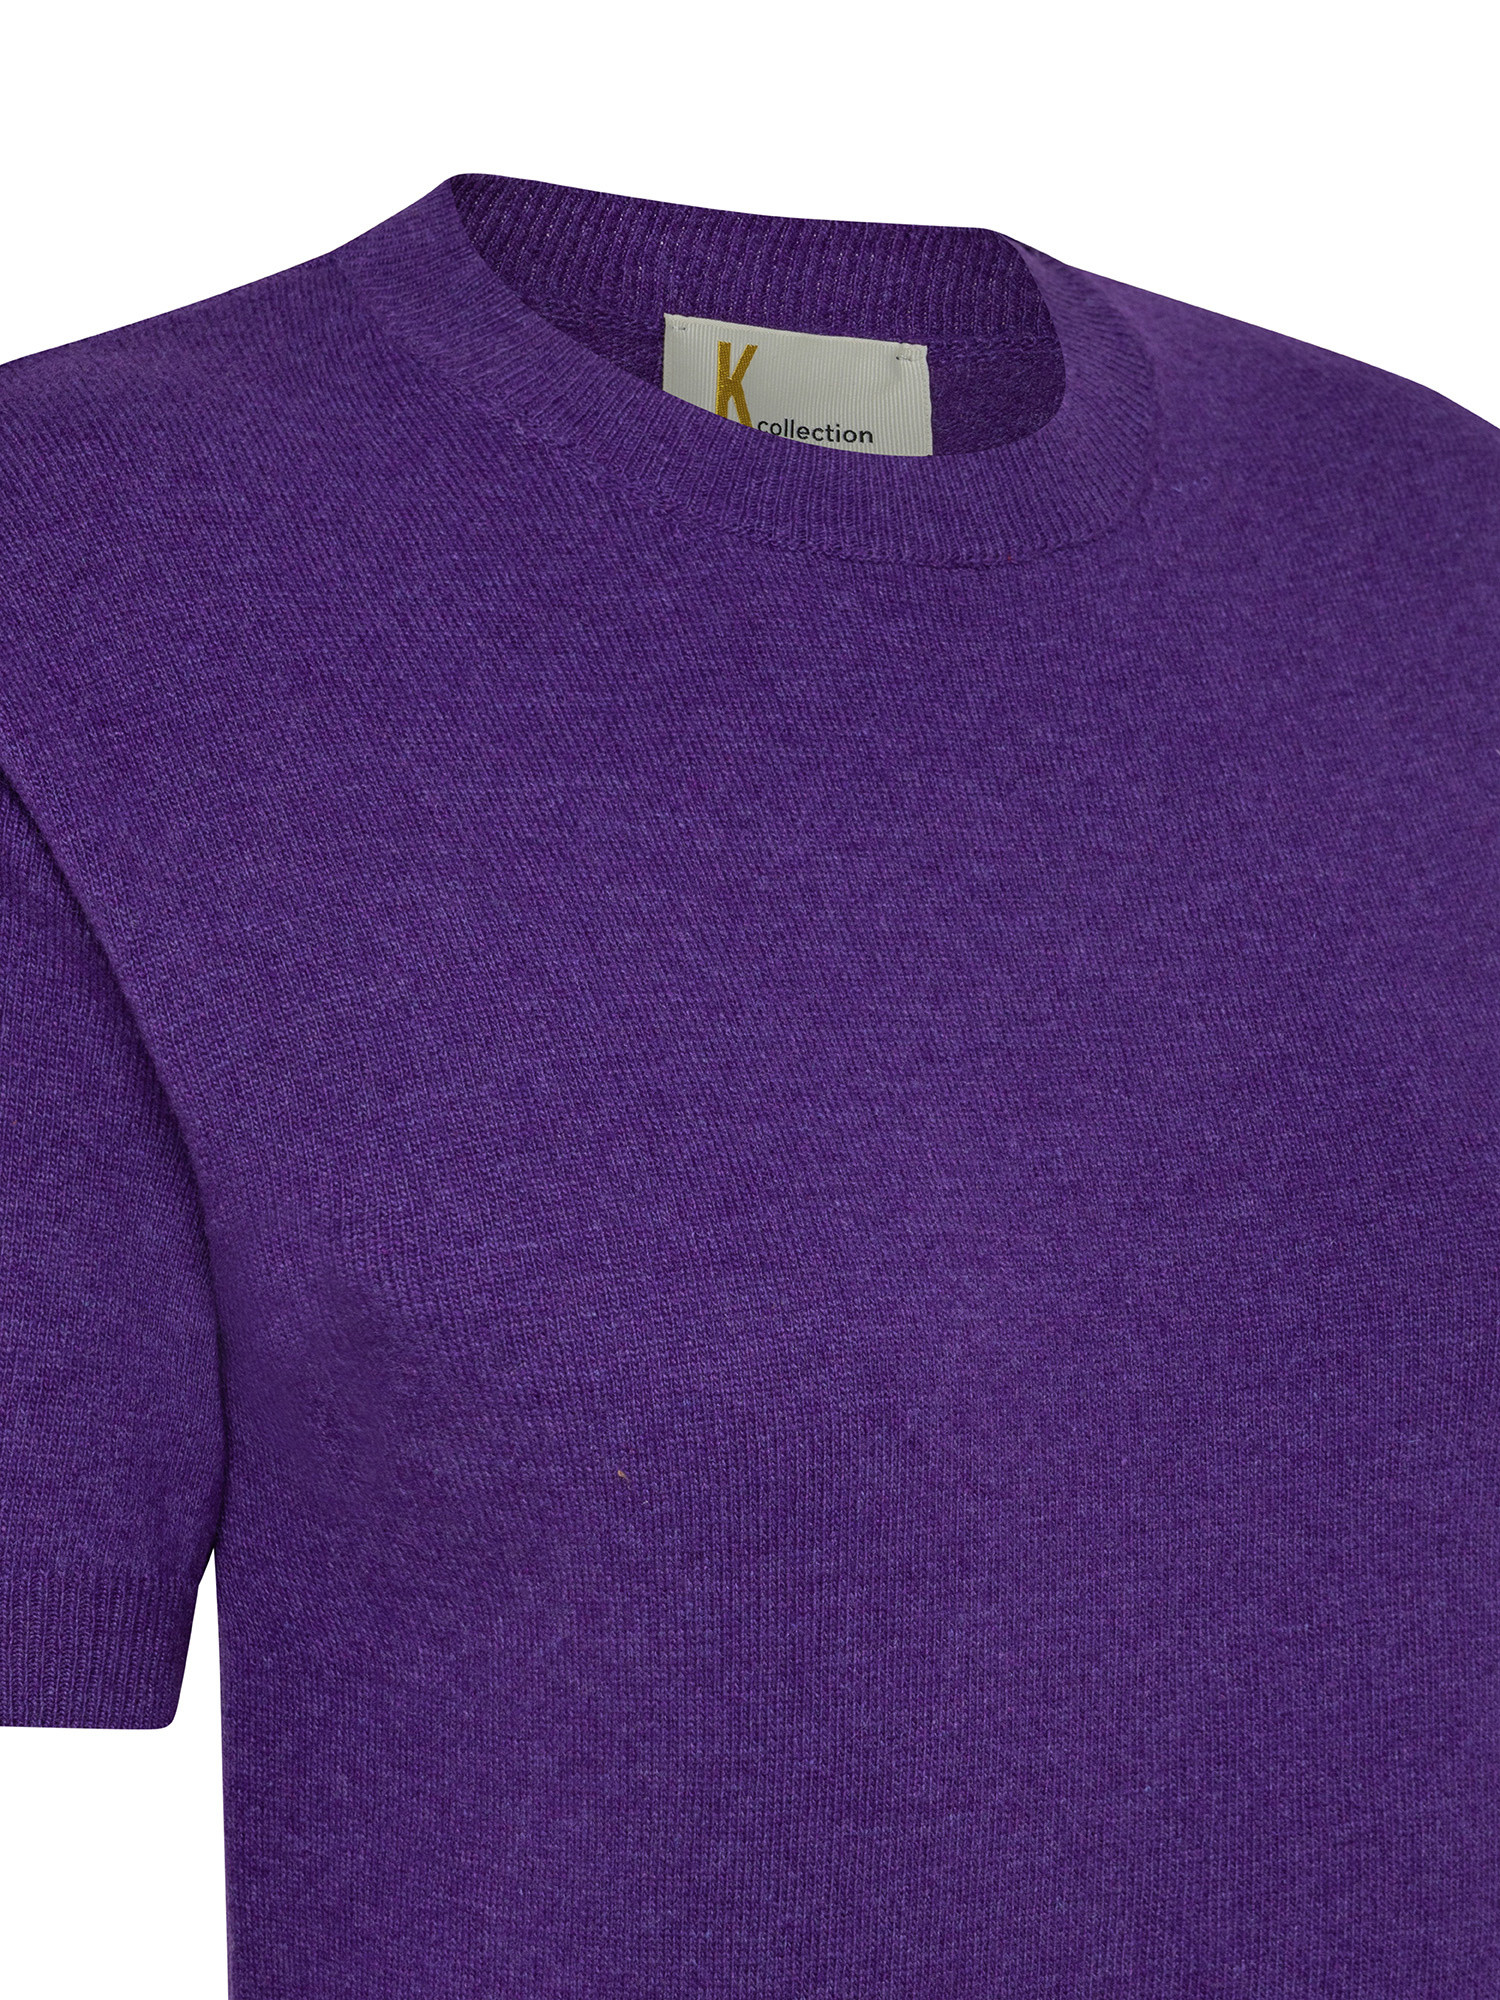 K Collection - Crewneck sweater, Purple, large image number 2